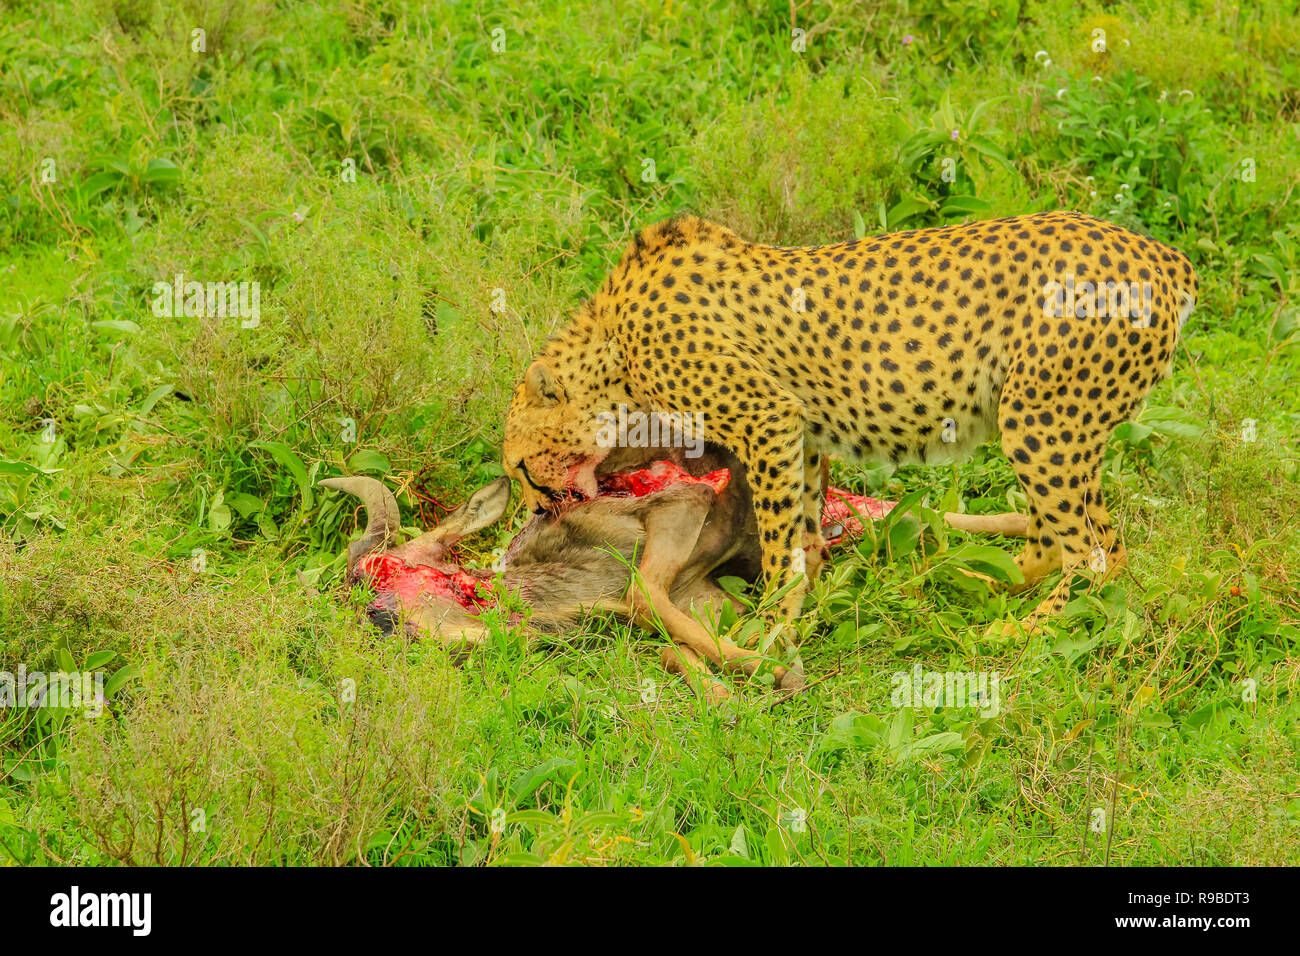 Geparden Mann isst ein junges Gnu oder Gnus im grünen Gras Vegetation. Ndutu Bereich der Ngorongoro Conservation Area, Tansania, Afrika. Stockfoto